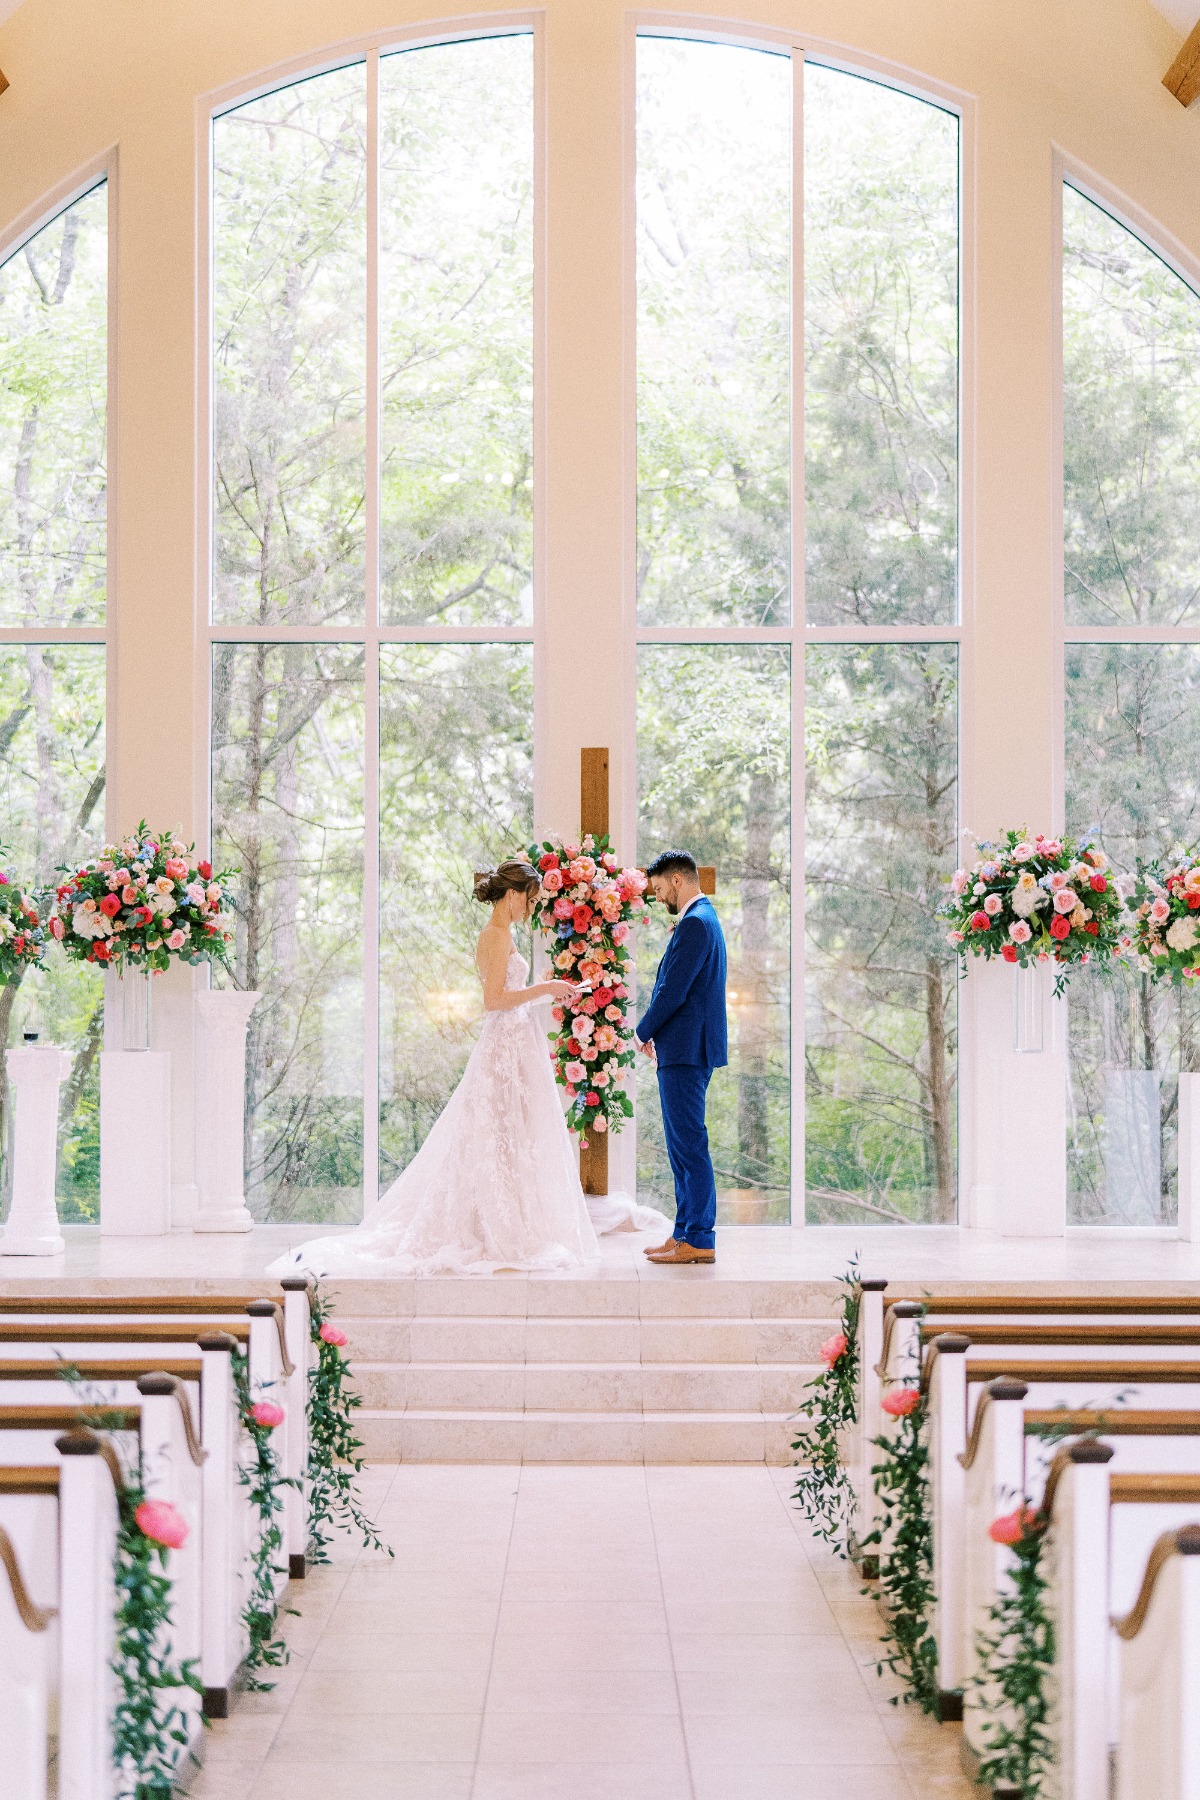 A Stunning Church Wedding Like You've Never Seen Before